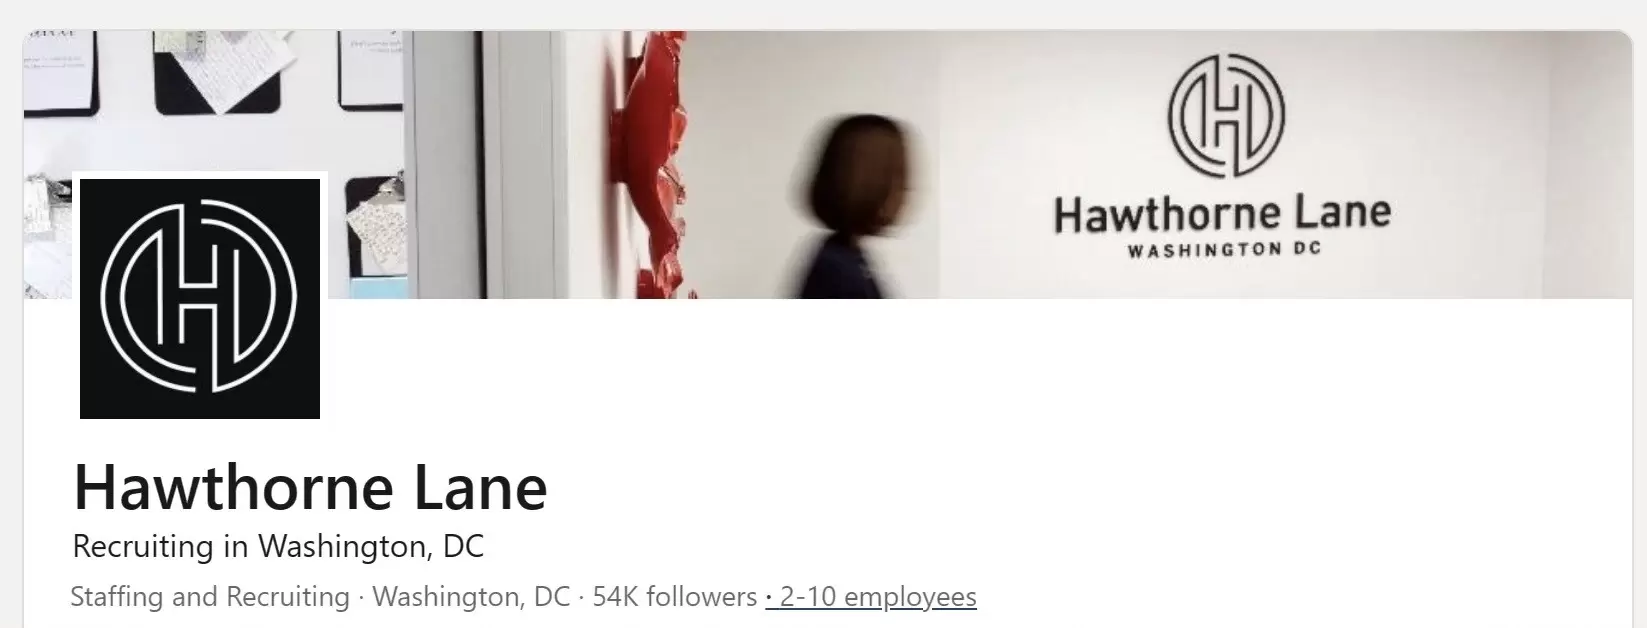 Hawthorne Lane on LinkedIn